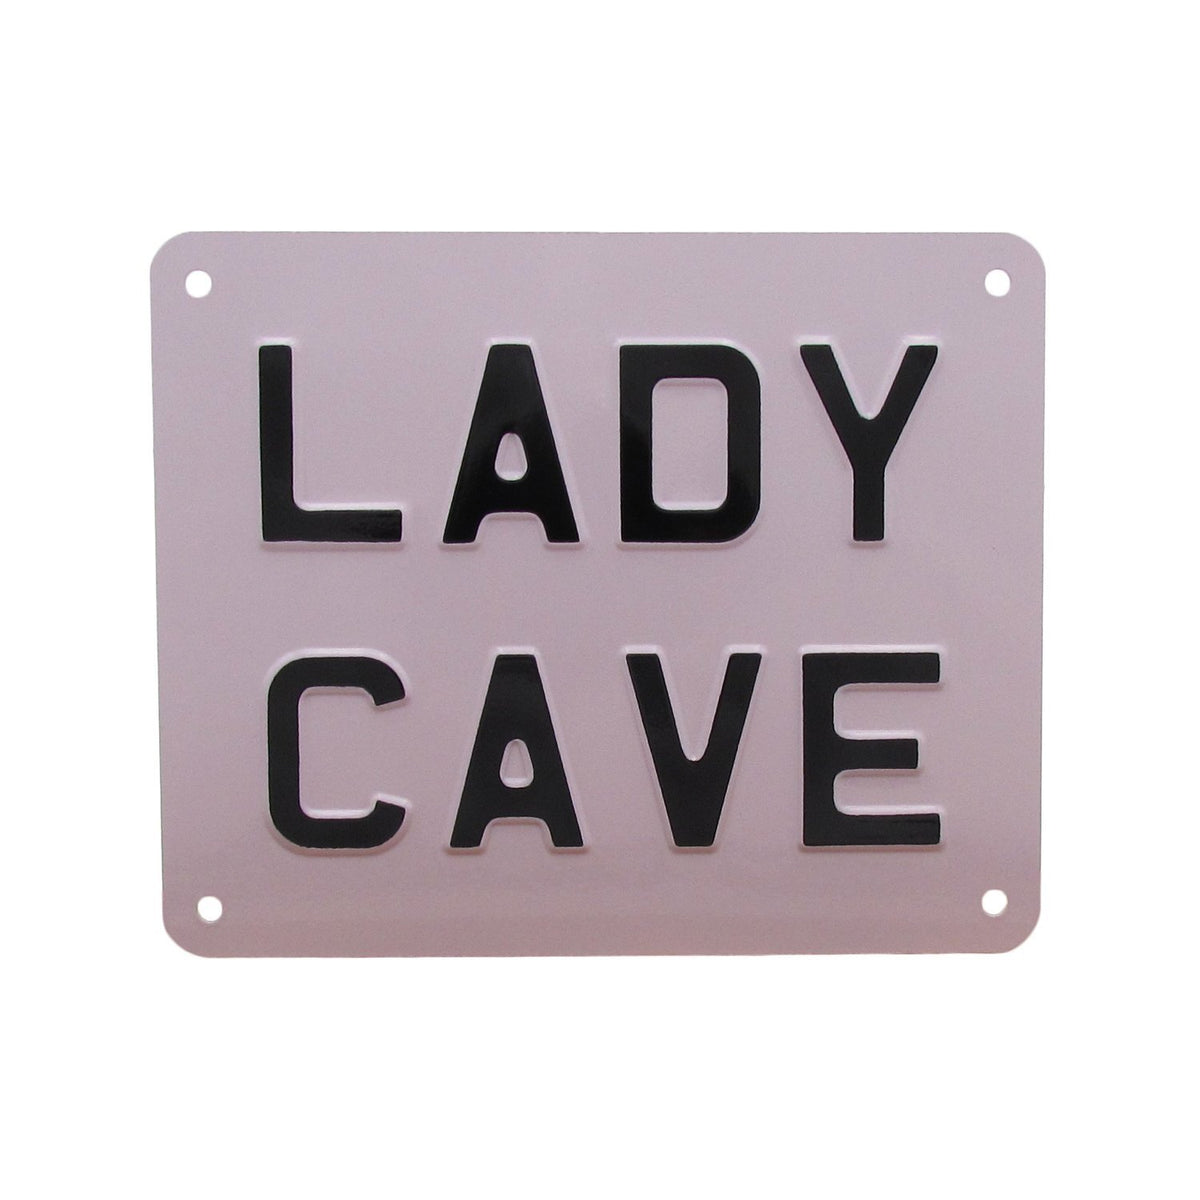 Lady Cave Enamel Sign - Lilac